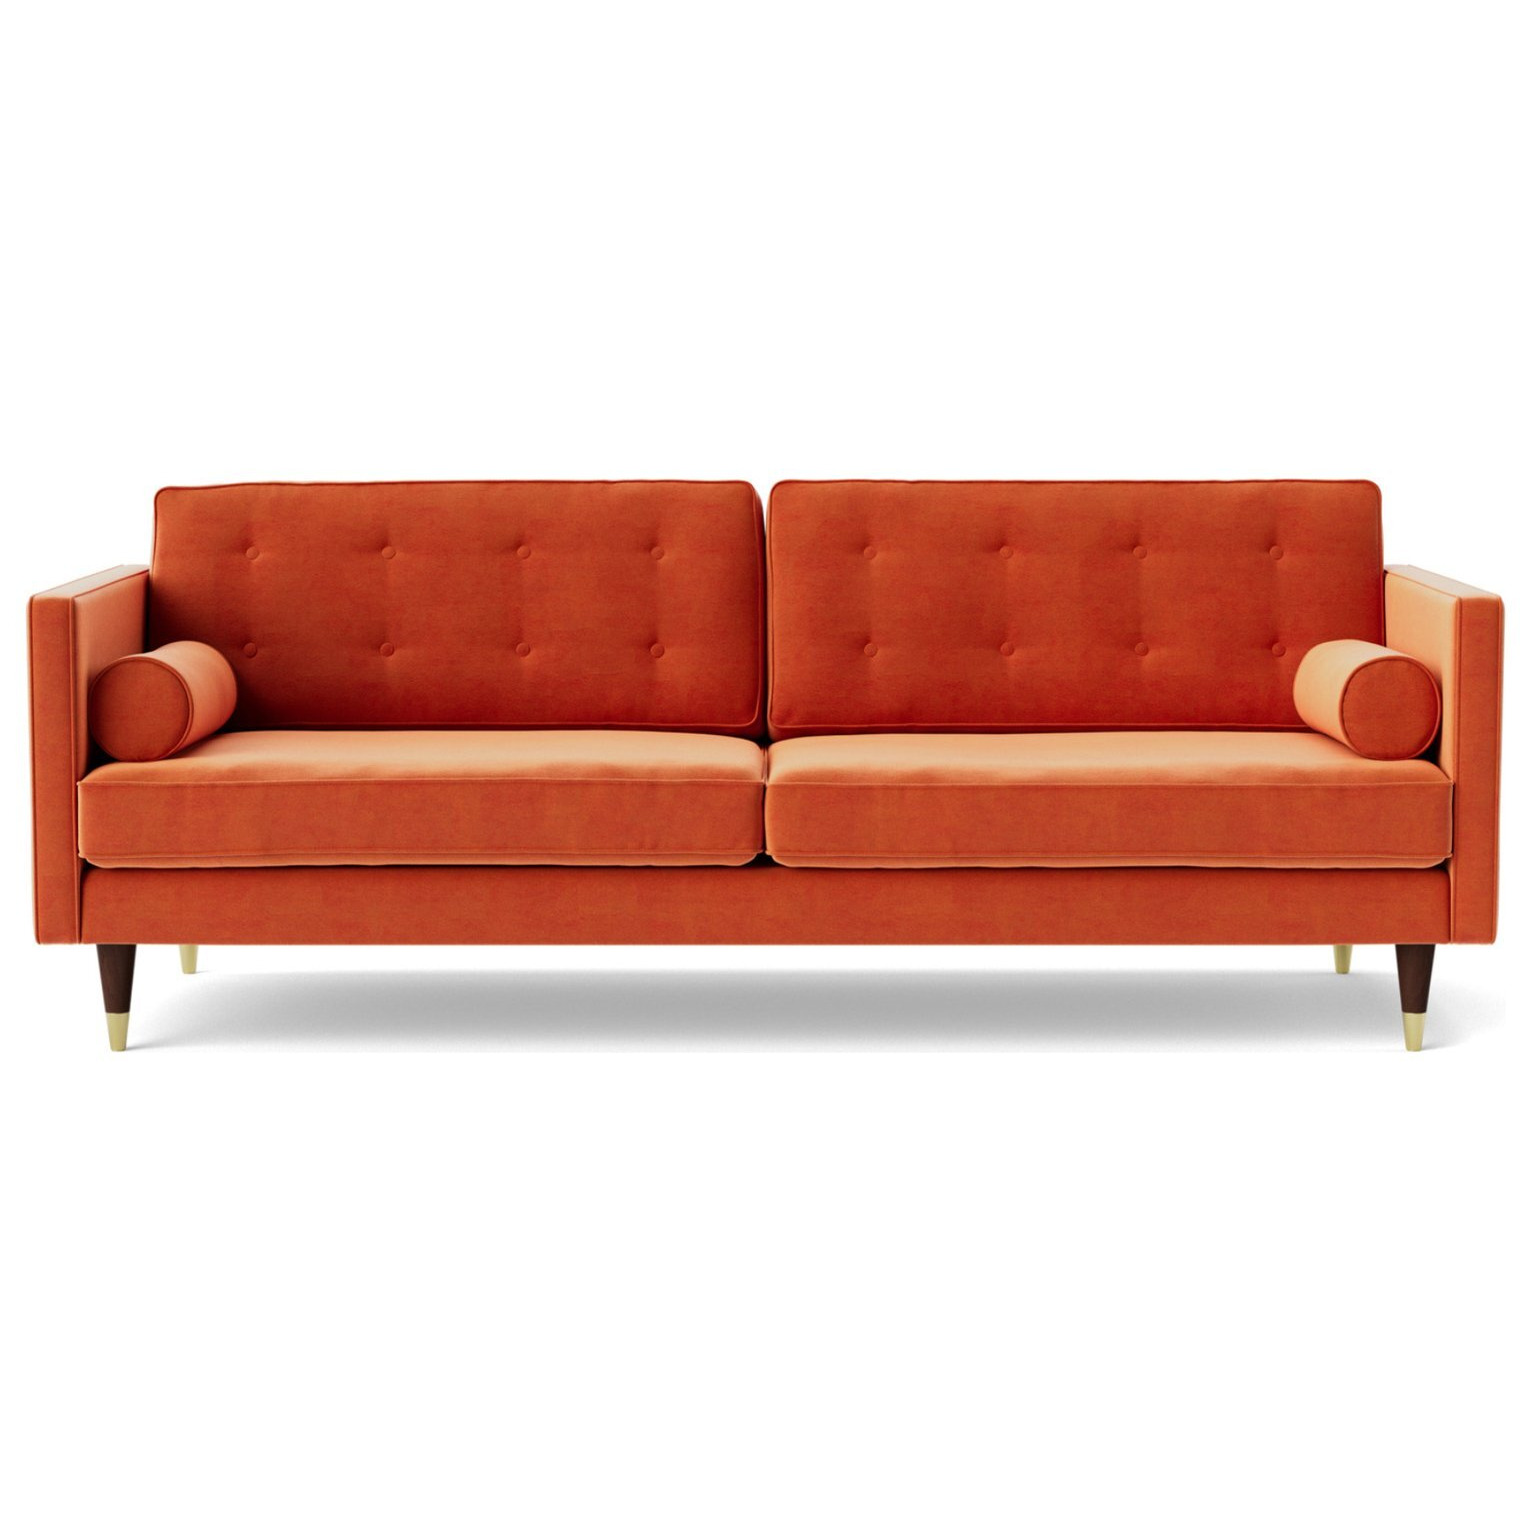 Swoon Porto Velvet 3 Seater Sofa - Burnt Orange - image 1